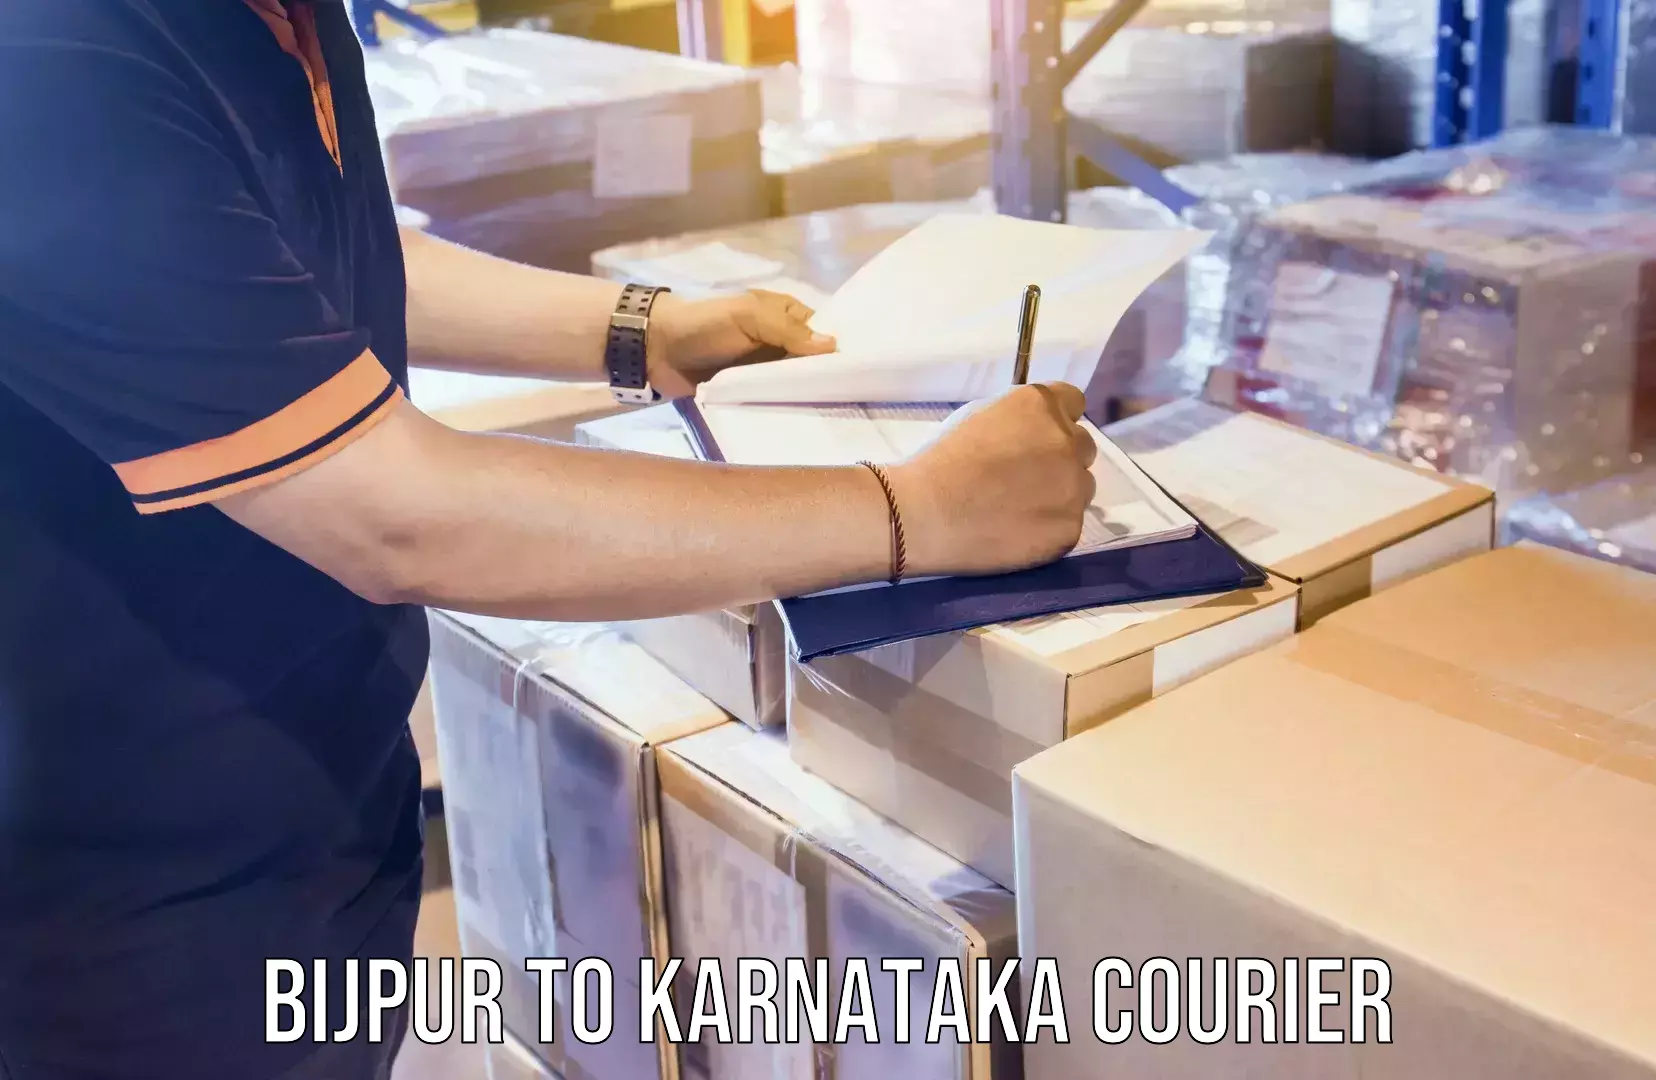 Full-service courier options Bijpur to Karnataka